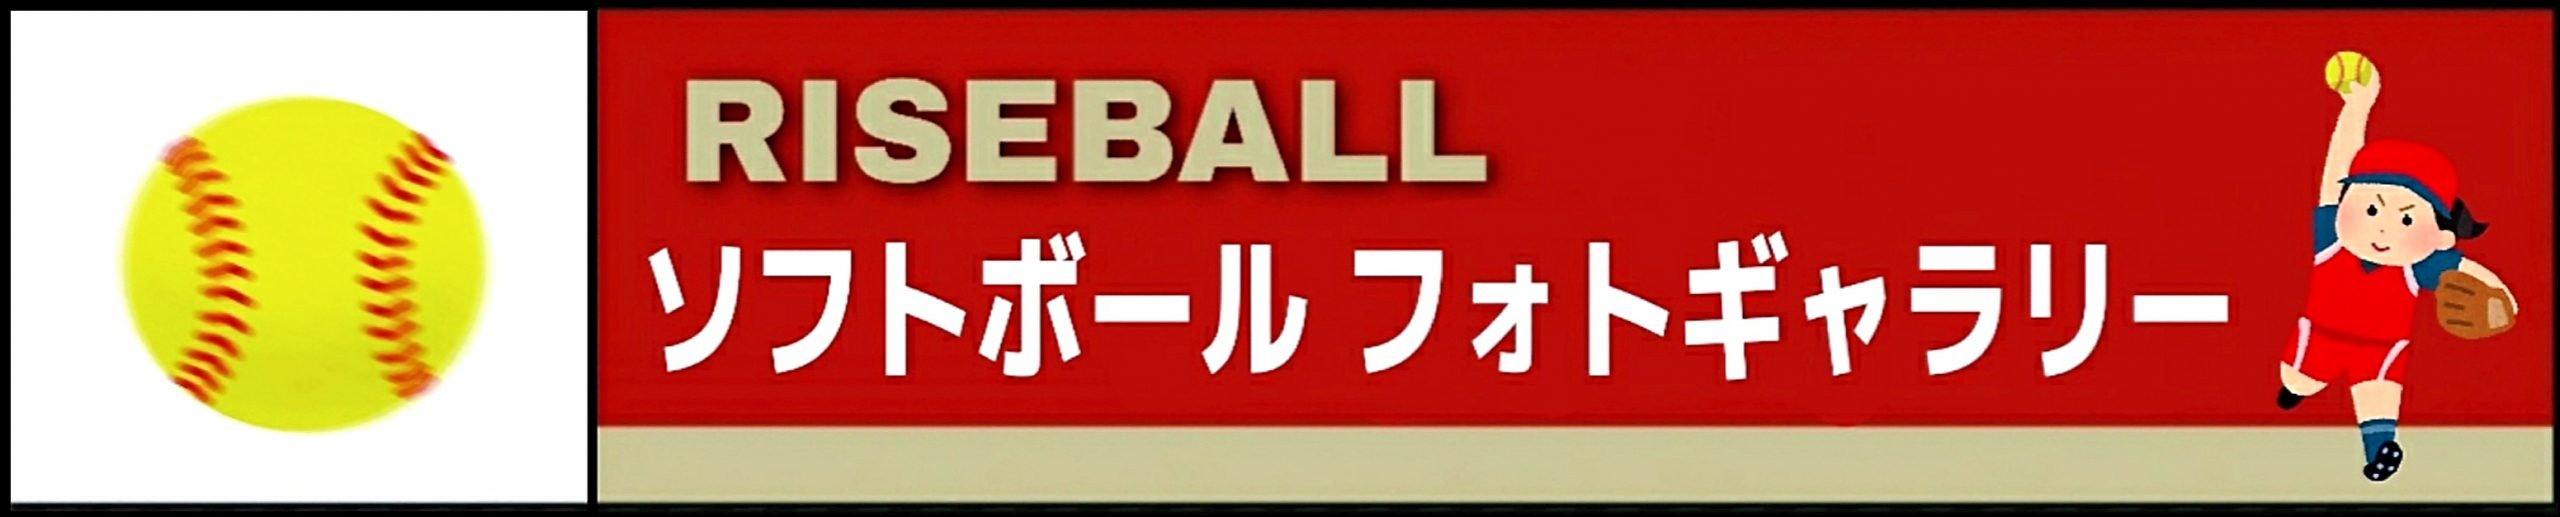 RISEBALL ソフトボール フォトギャラリー